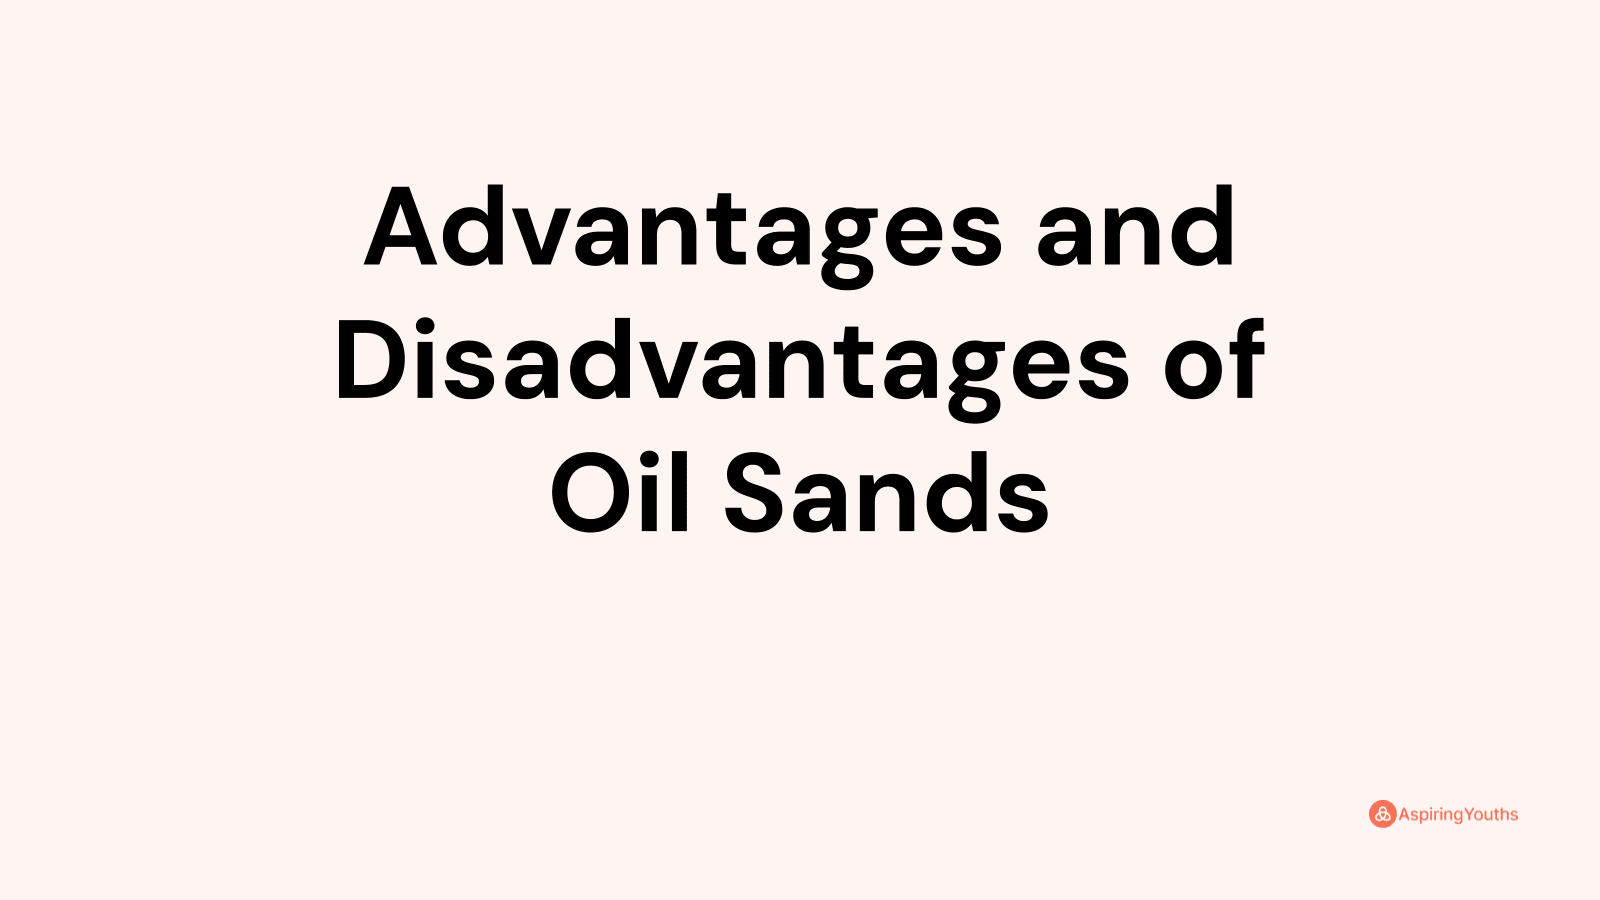 Advantages and disadvantages of Oil Sands